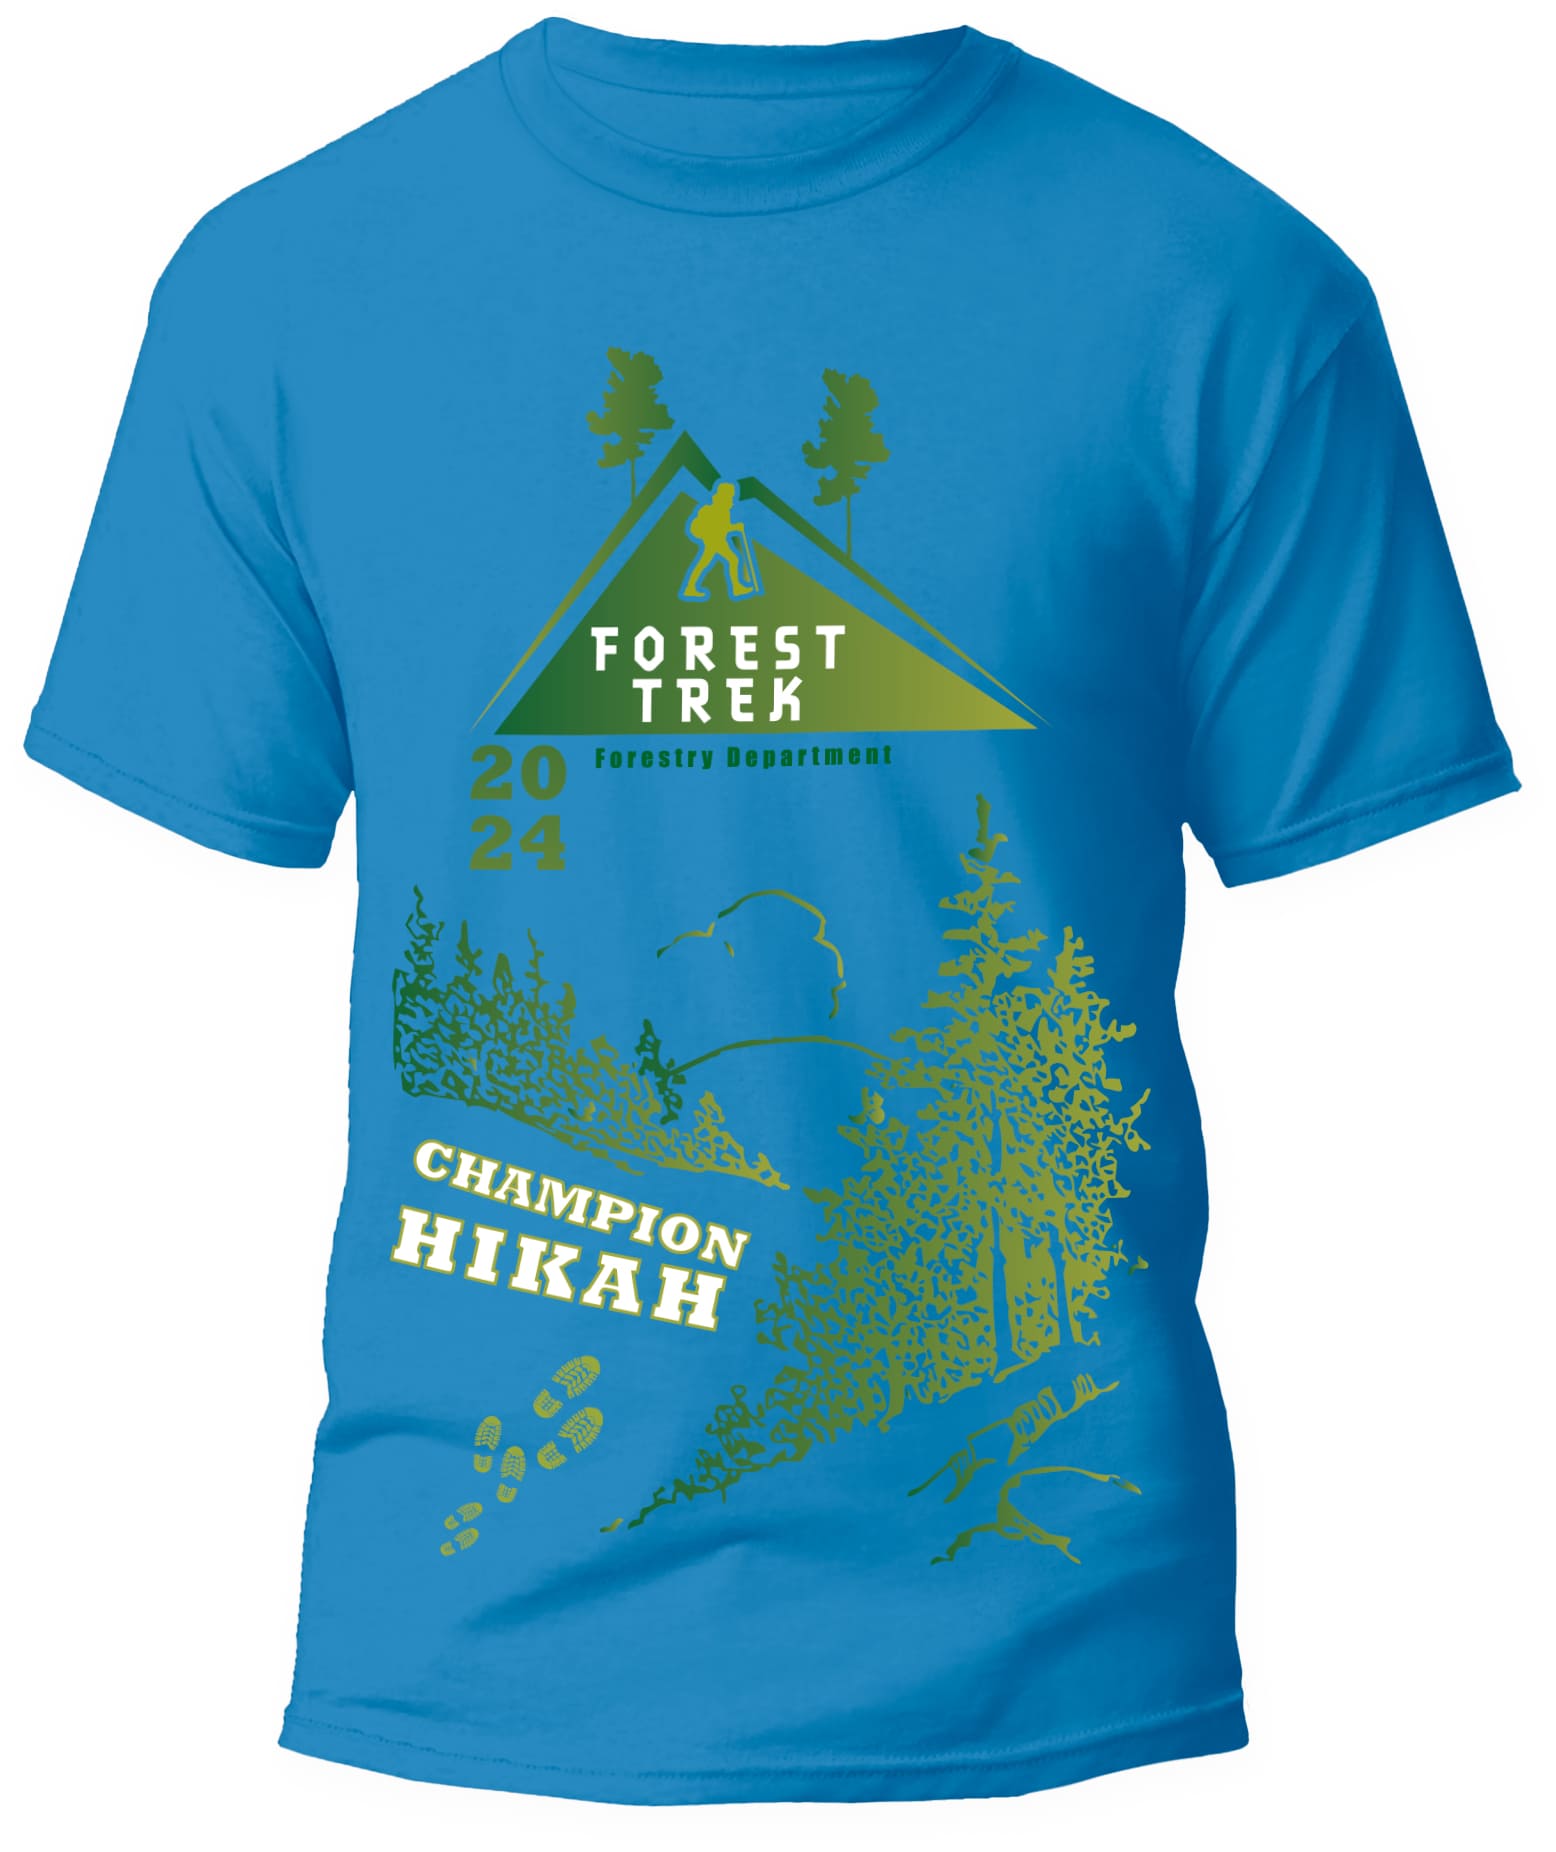 Forest Trek Champion Hikah - Adult Turquoise